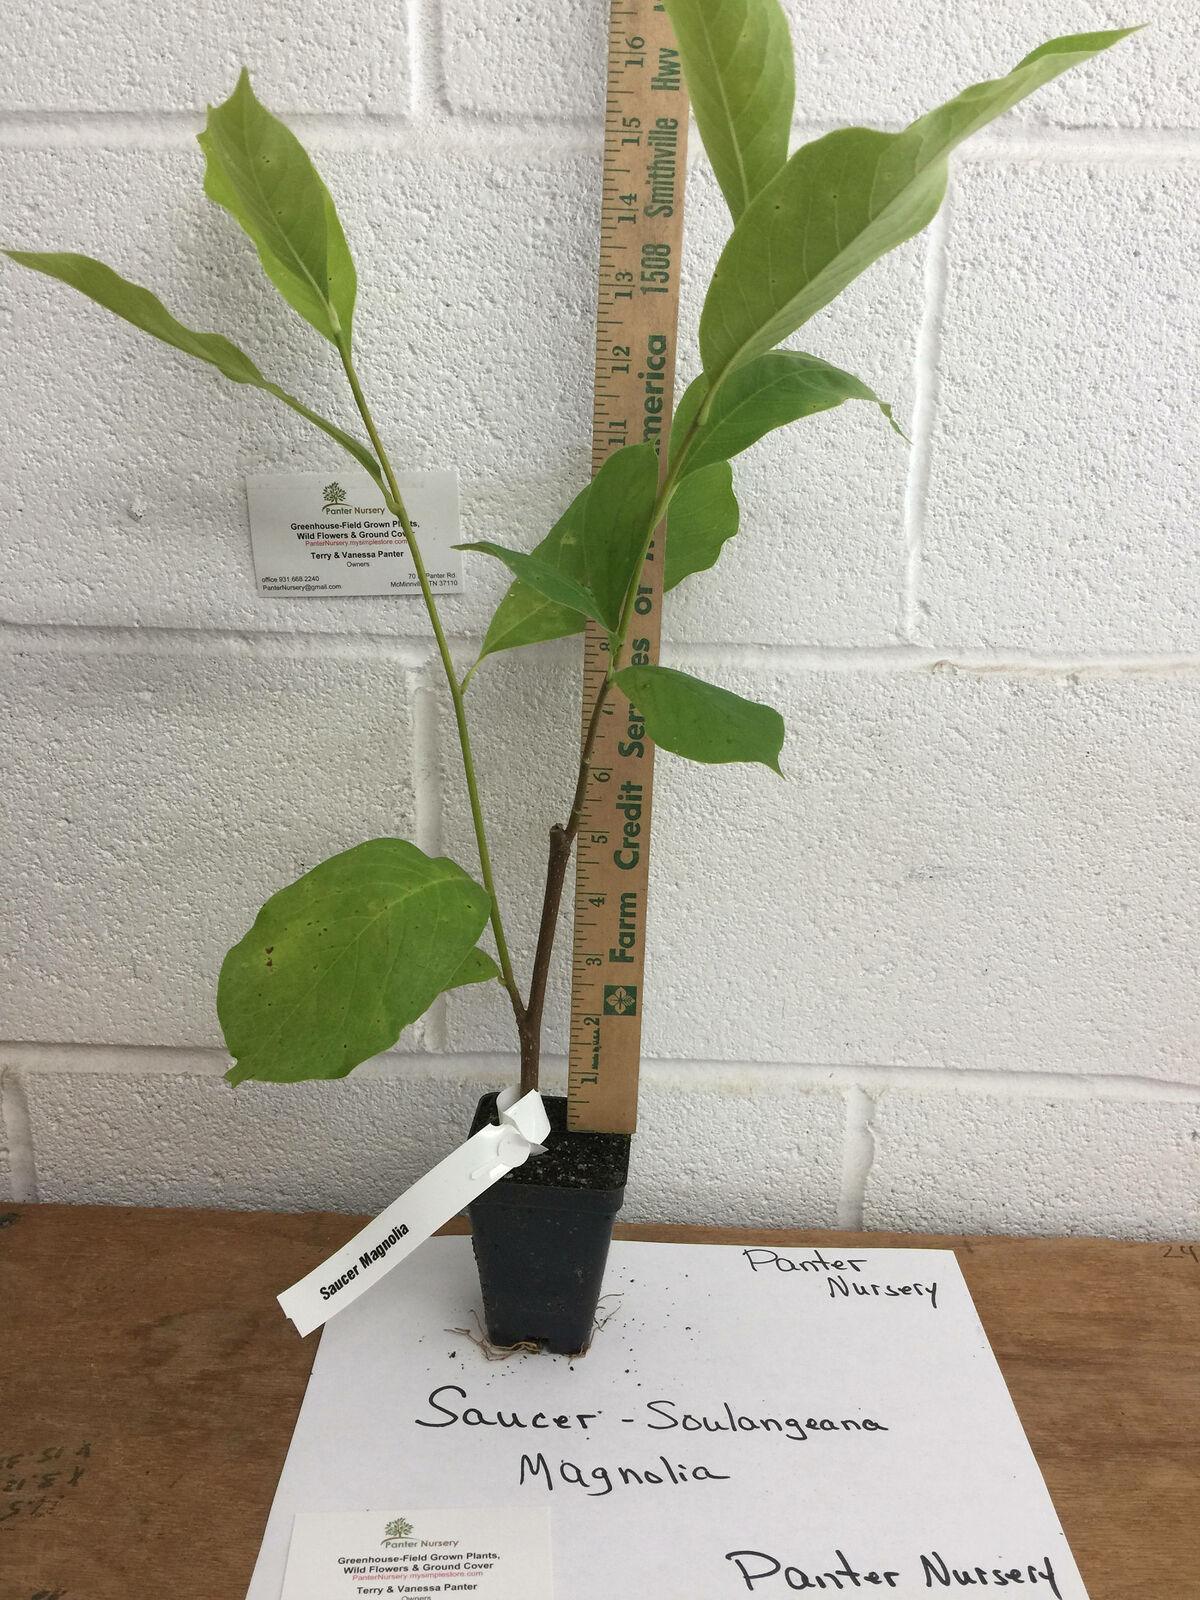 Saucer Magnolia (Chinese Magnolia) Tree/Shrub - 6-12" Tall Live Plant - 2.5" Pot - Magnolia x soulangeana - The Nursery Center